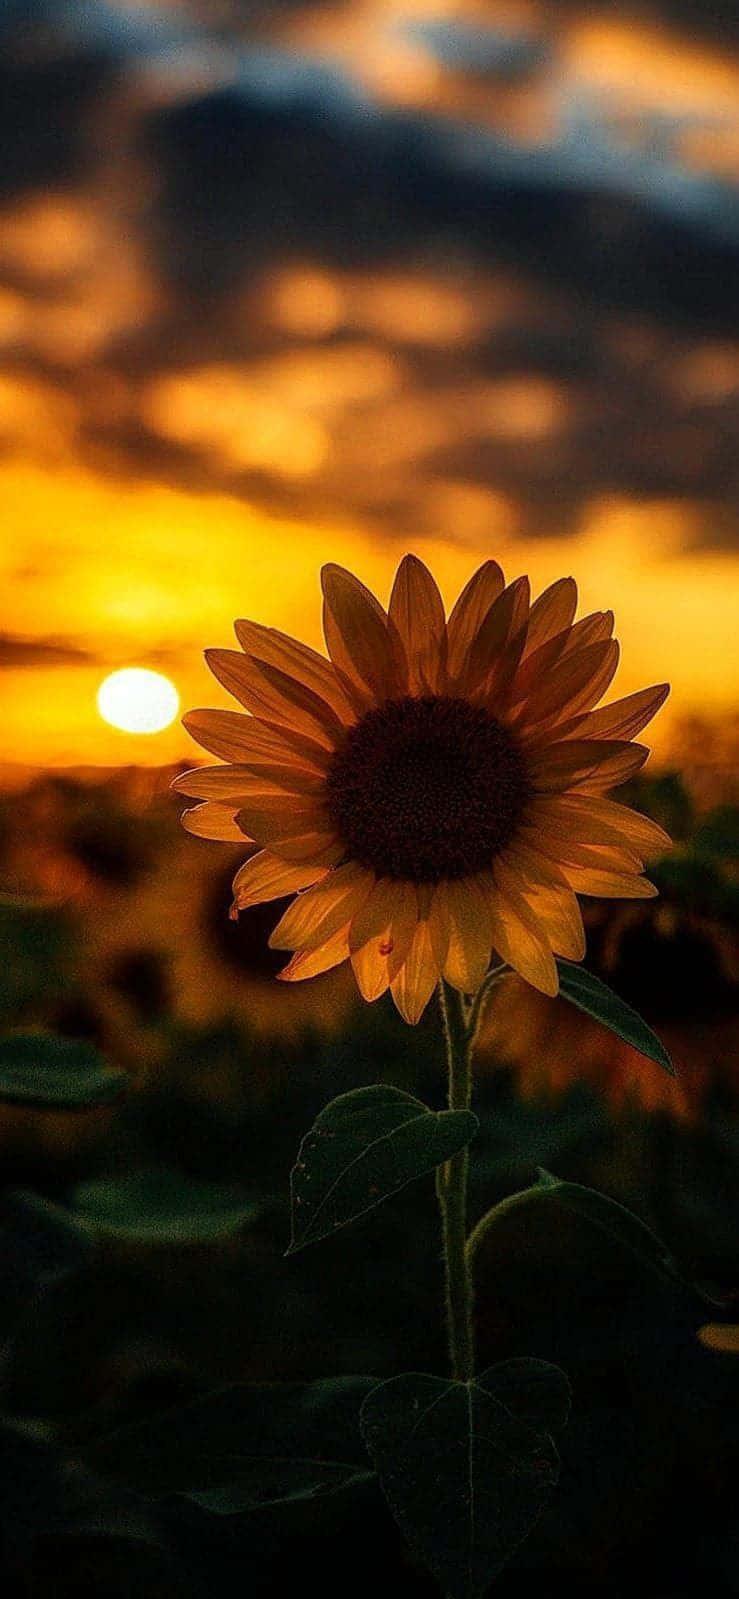 Sun Setting On A Sunflower Aesthetic iPhone Wallpaper